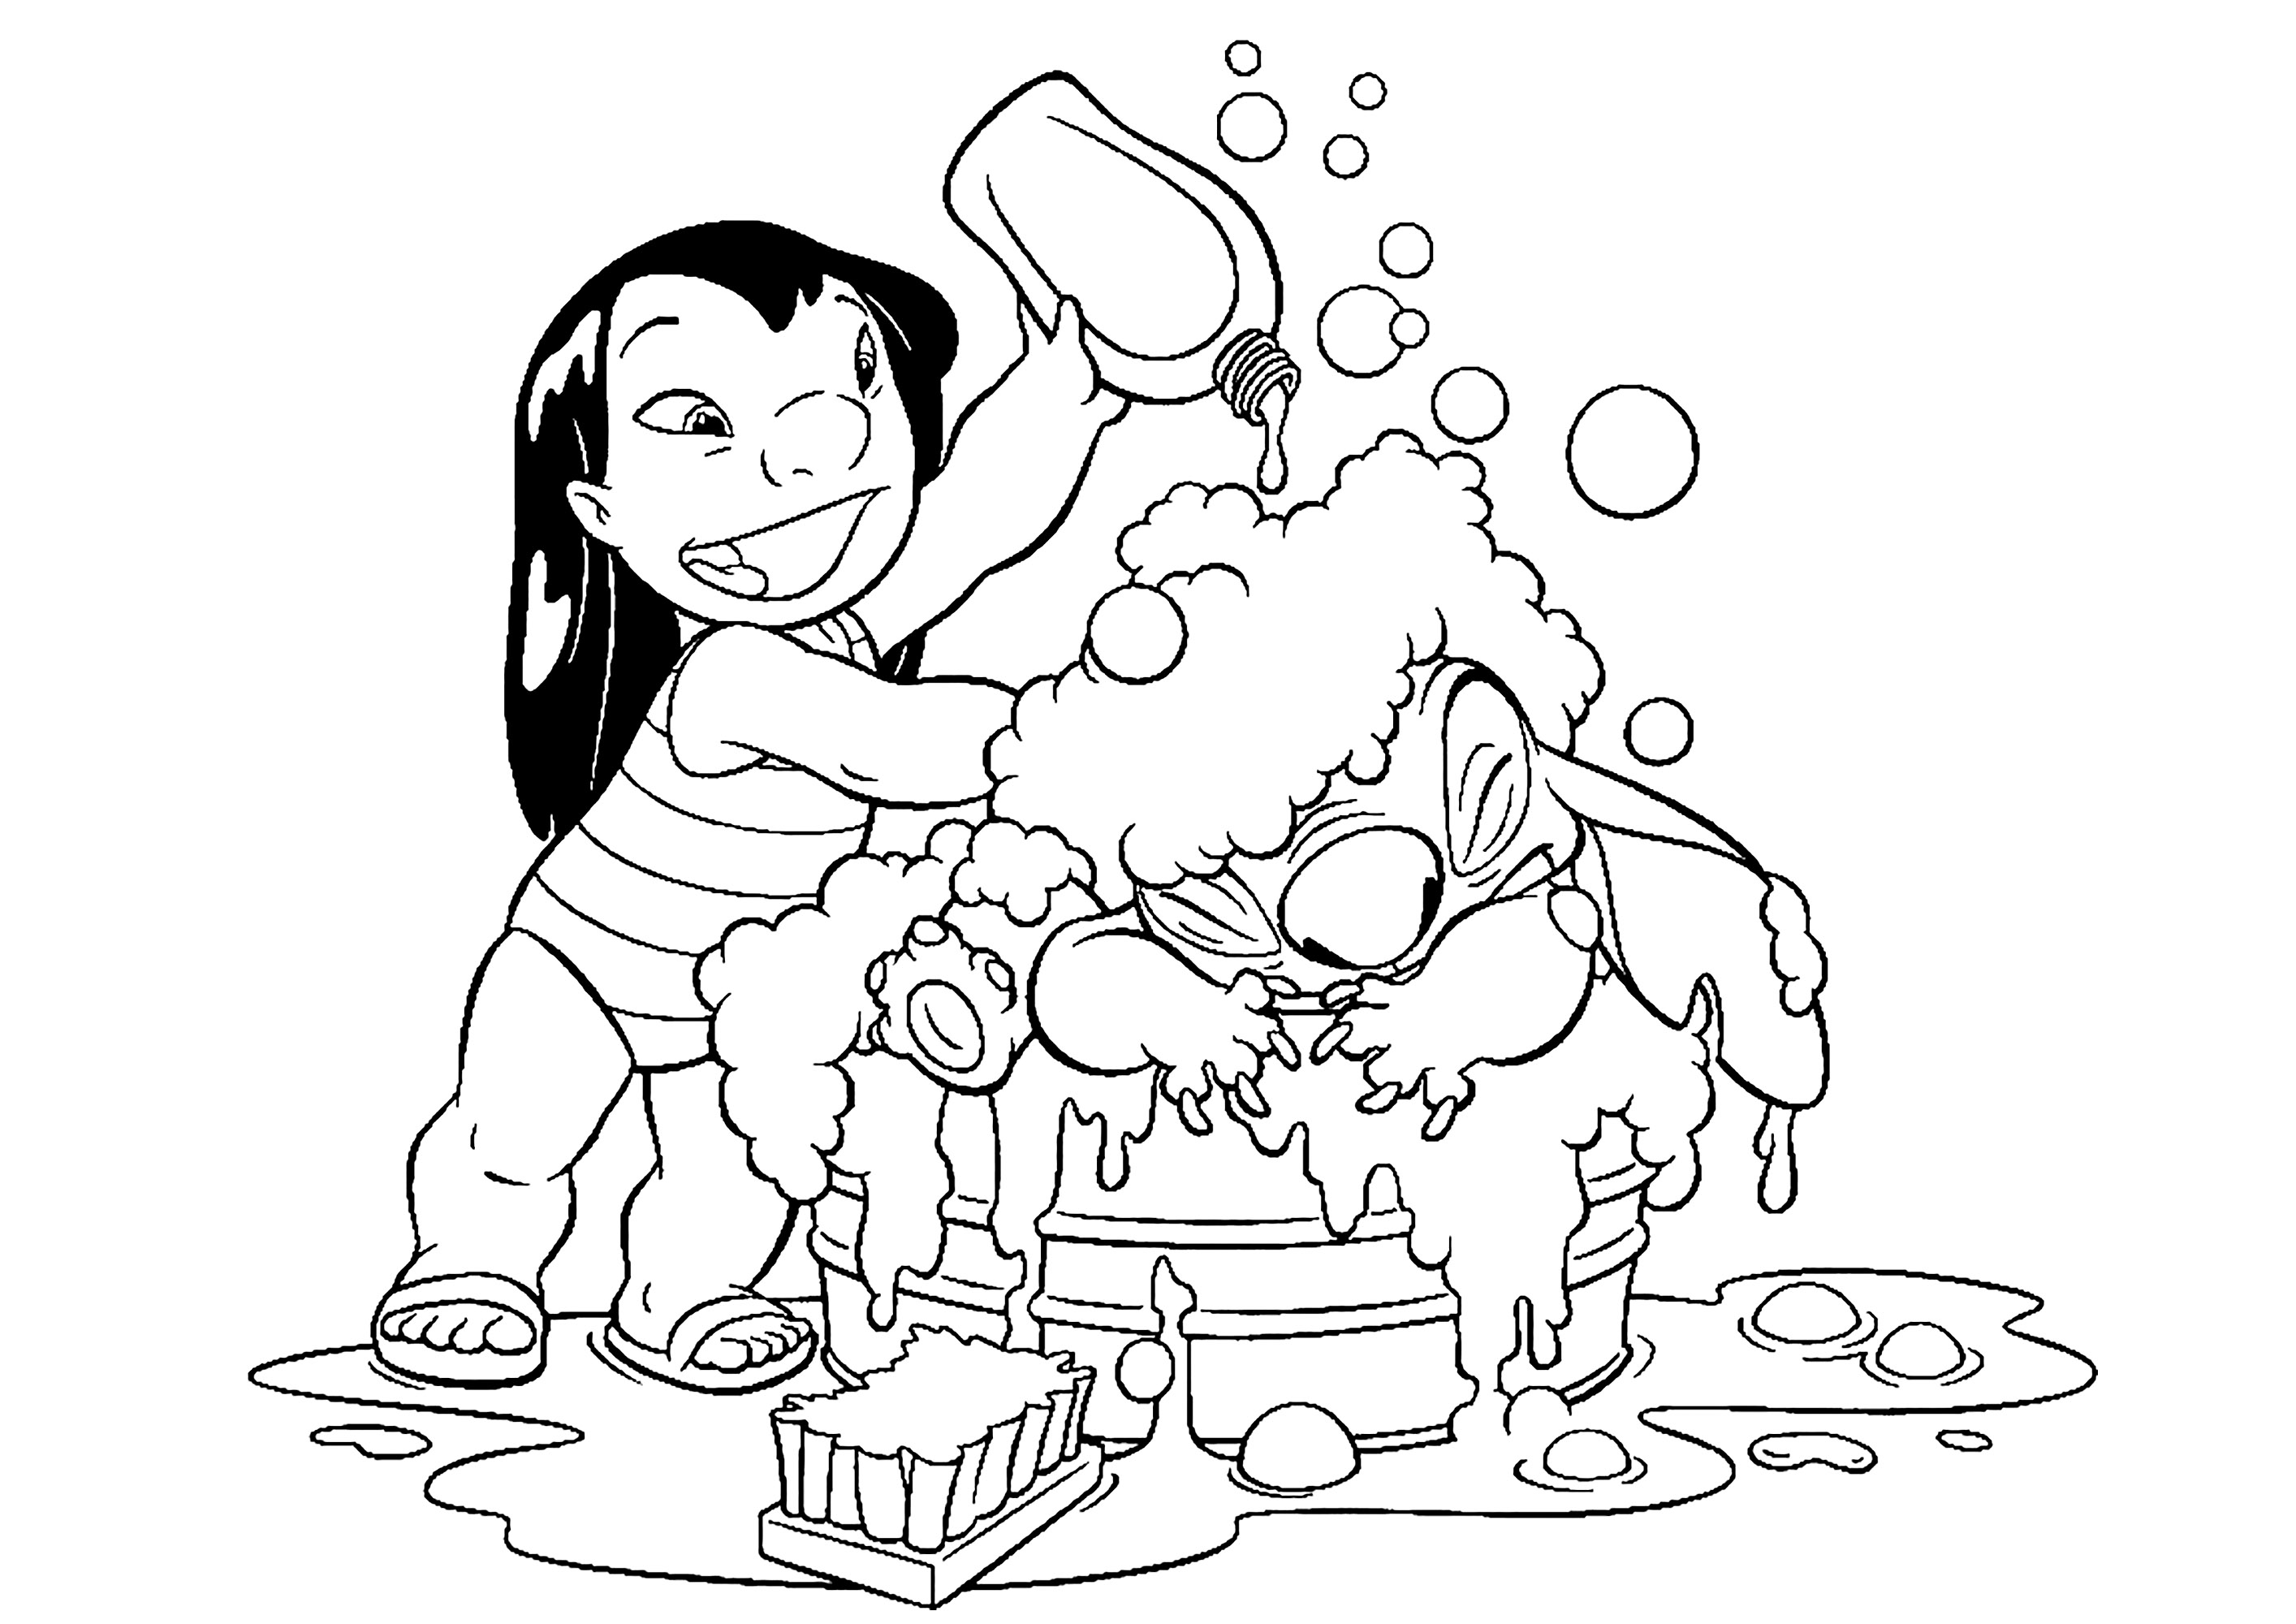 Lilo and Stitch: The Shampoo